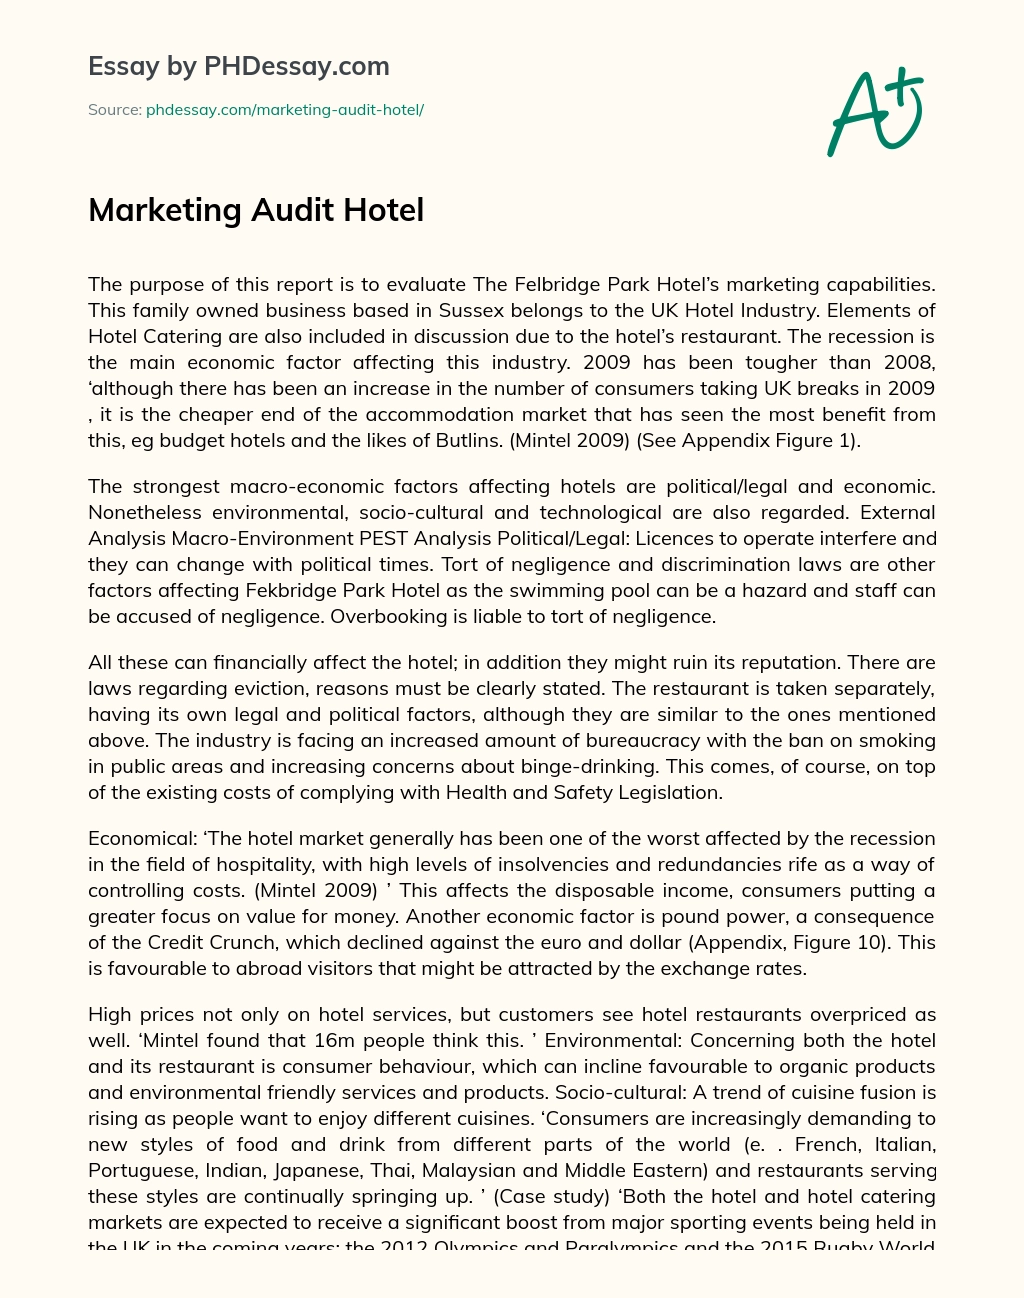 Marketing Audit Hotel essay